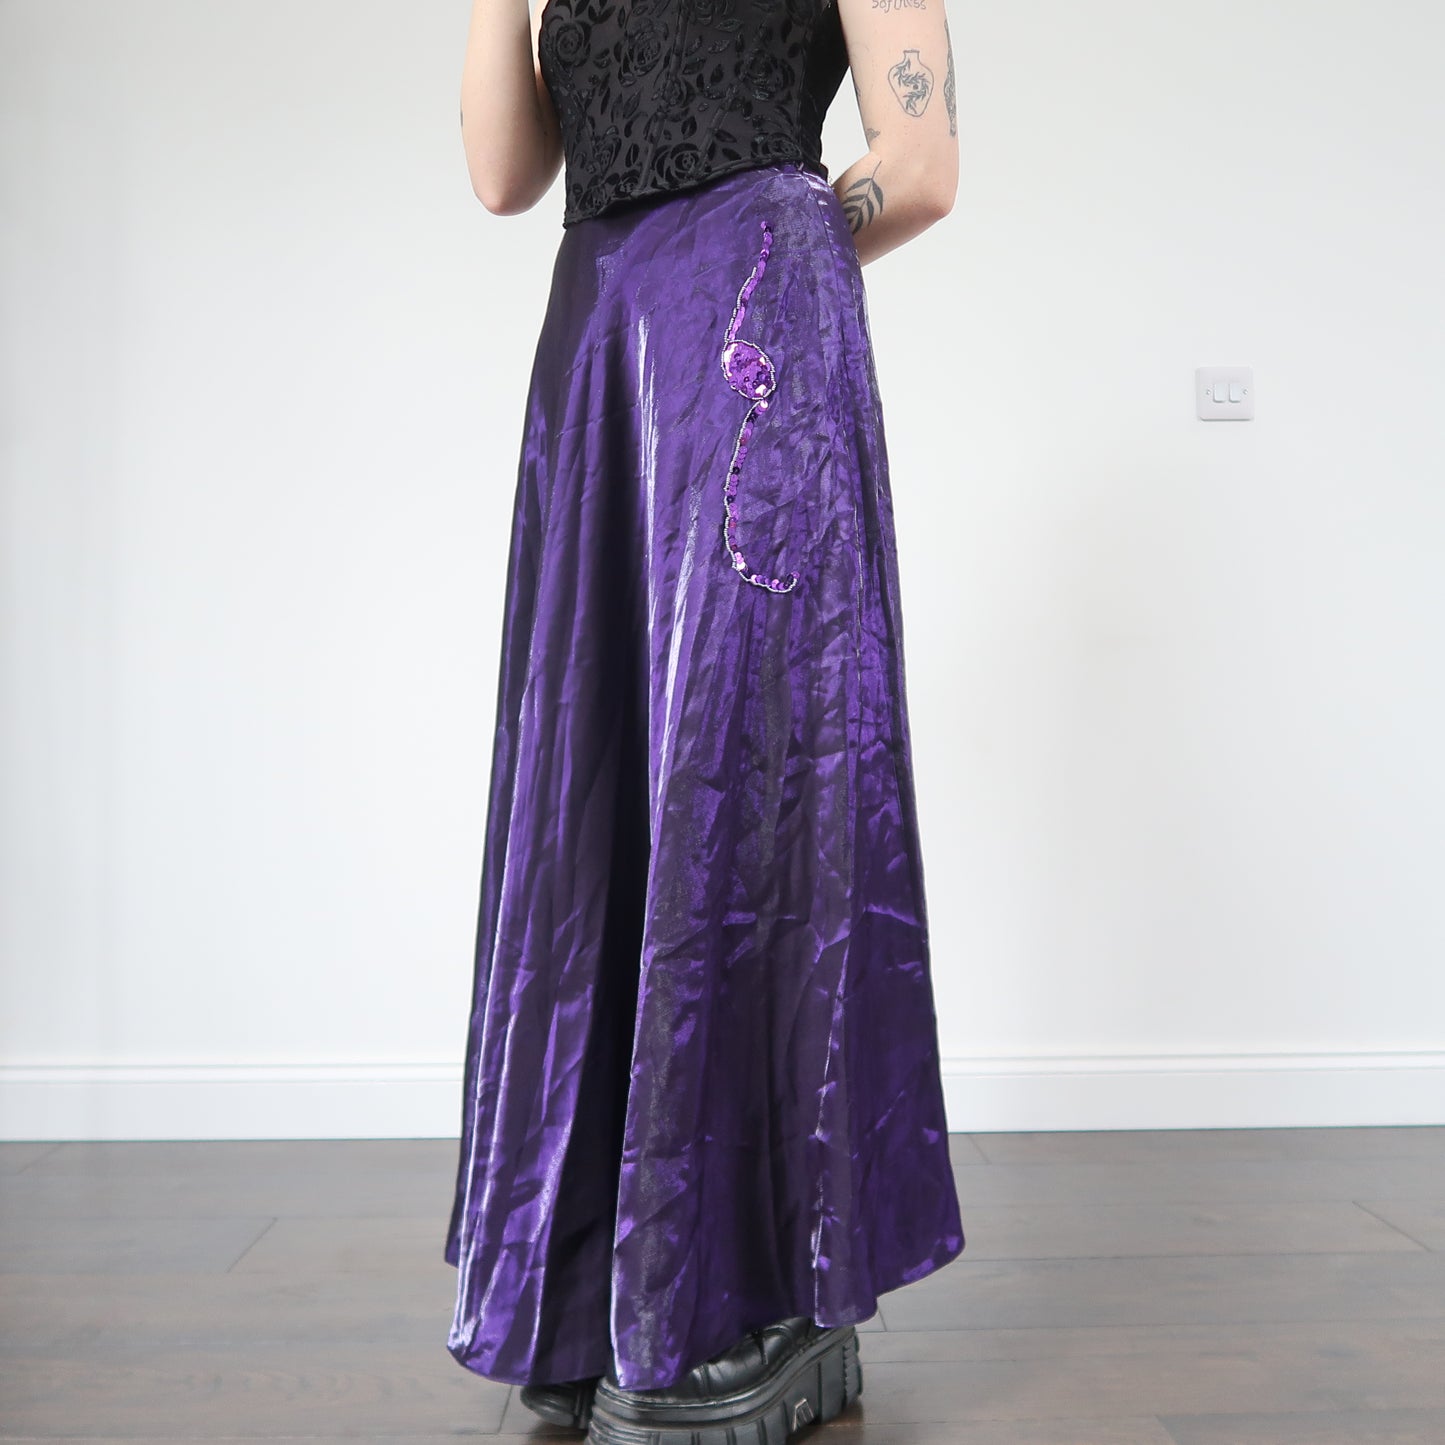 Purple skirt - size 8/10